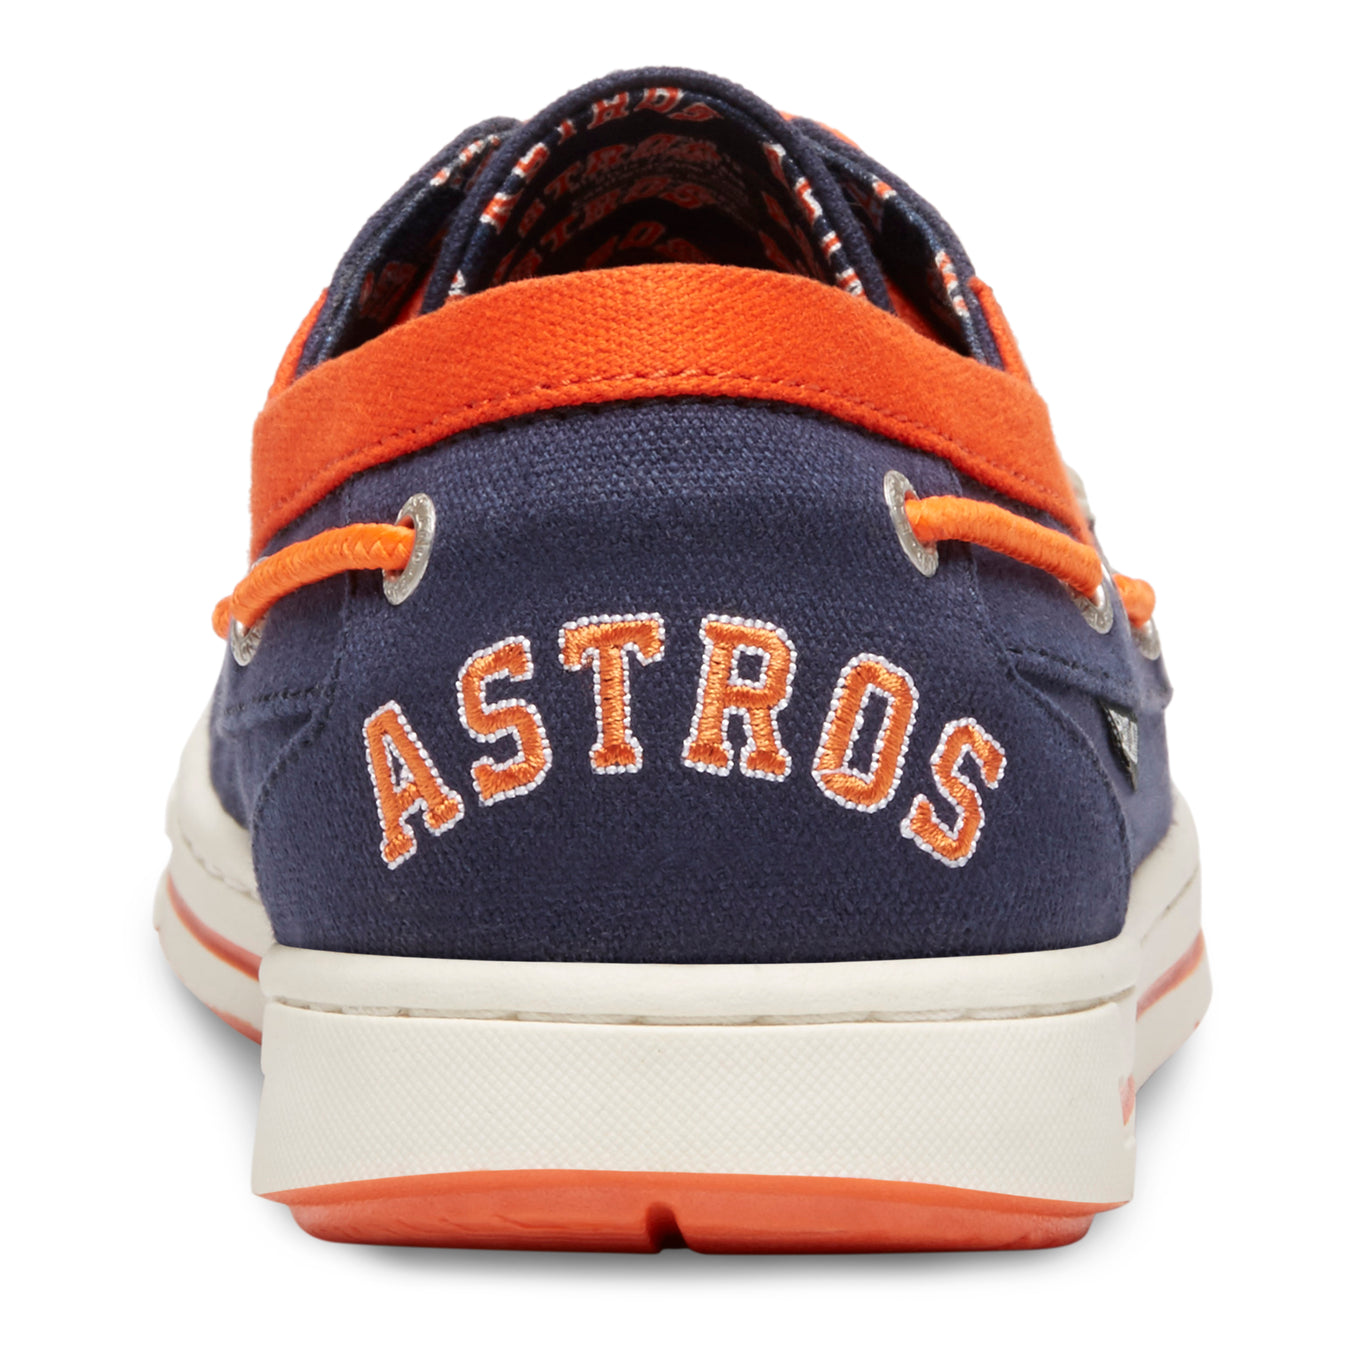 Men's Canvas Boat Shoes - Adventure MLB Houston Astros – Eastland